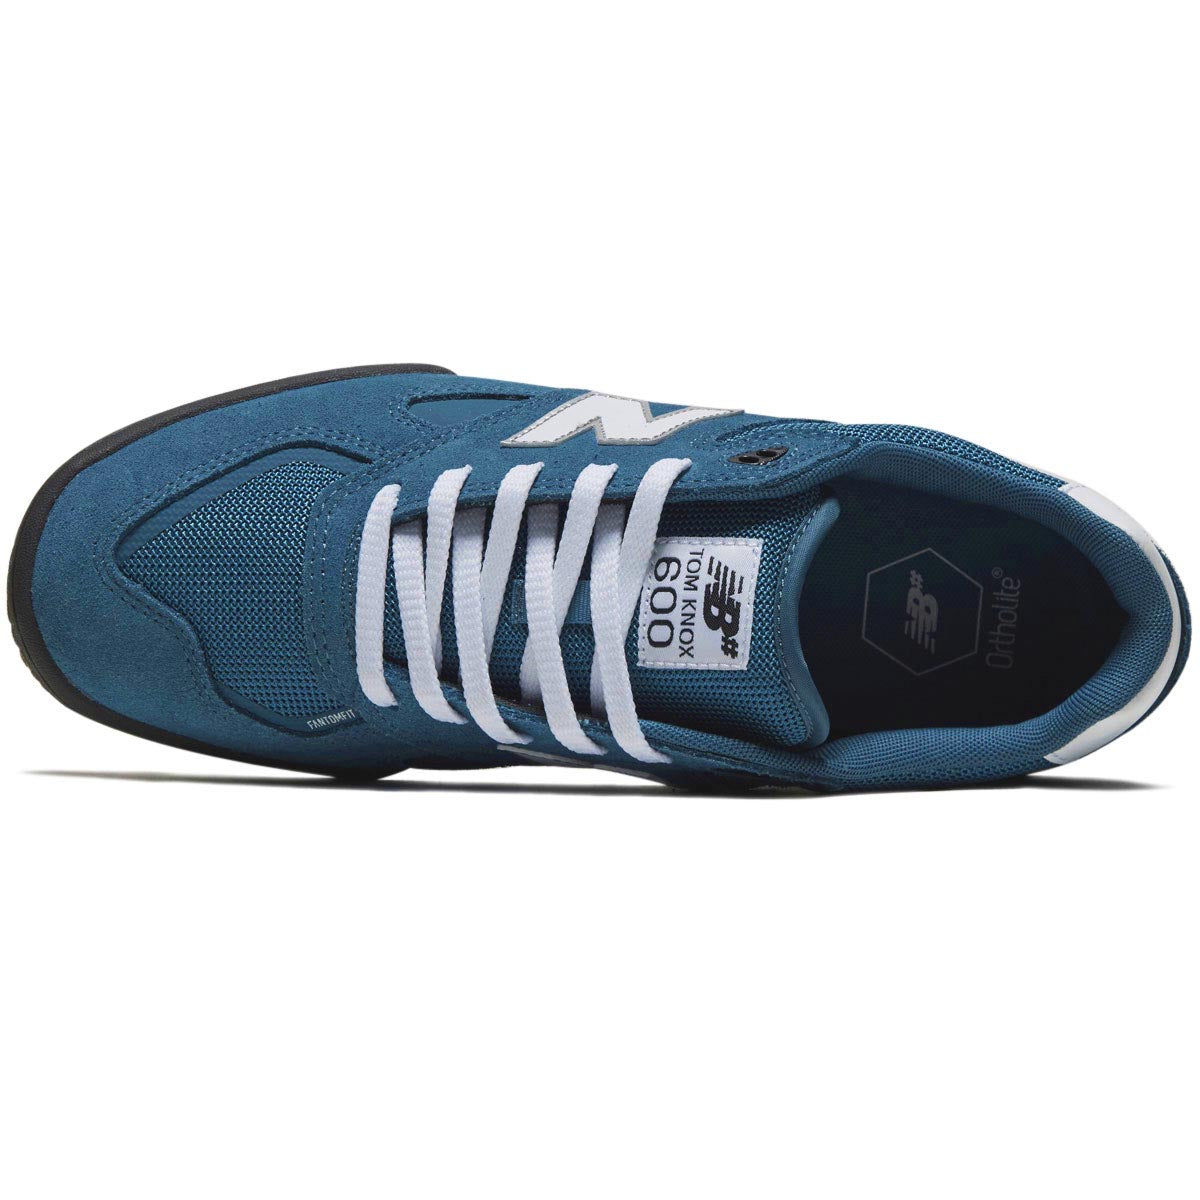 New Balance 600 Tom Knox Shoes - Elemental Blue/Black image 3